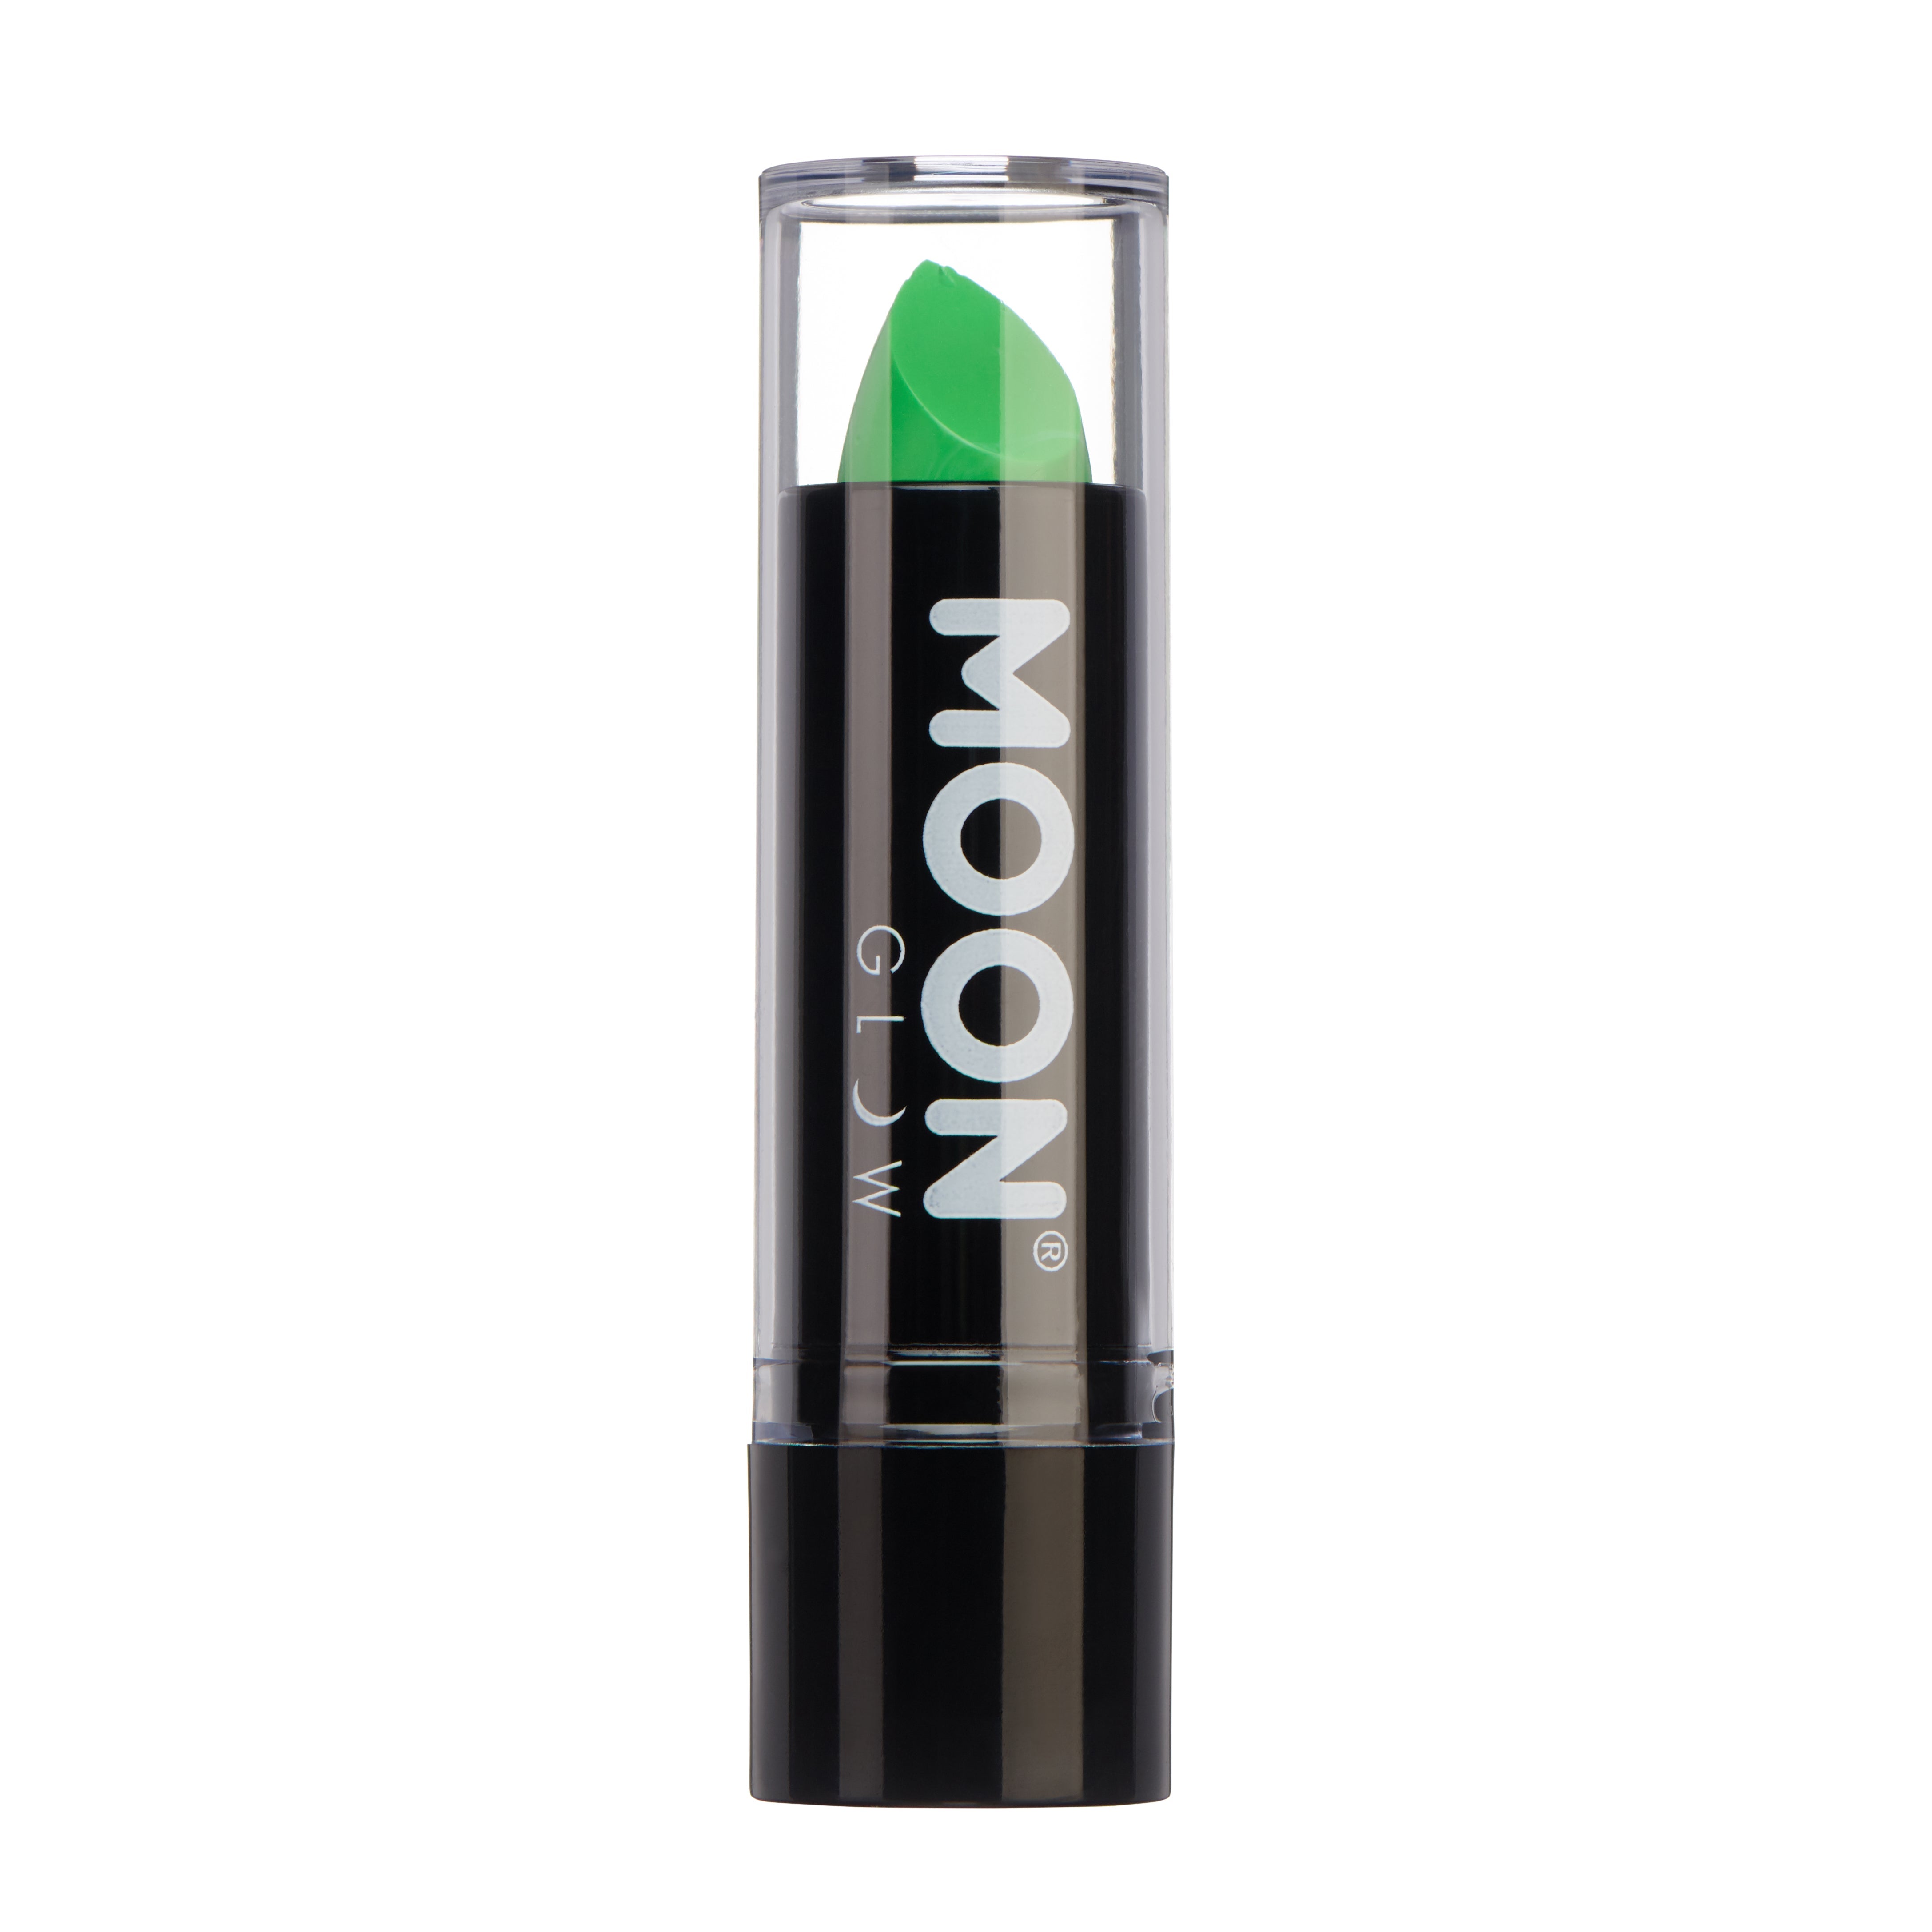 Intense Green - Neon UV Glow Blacklight Lipstick, 5g. Cosmetically certified, FDA & Health Canada compliant and cruelty free.